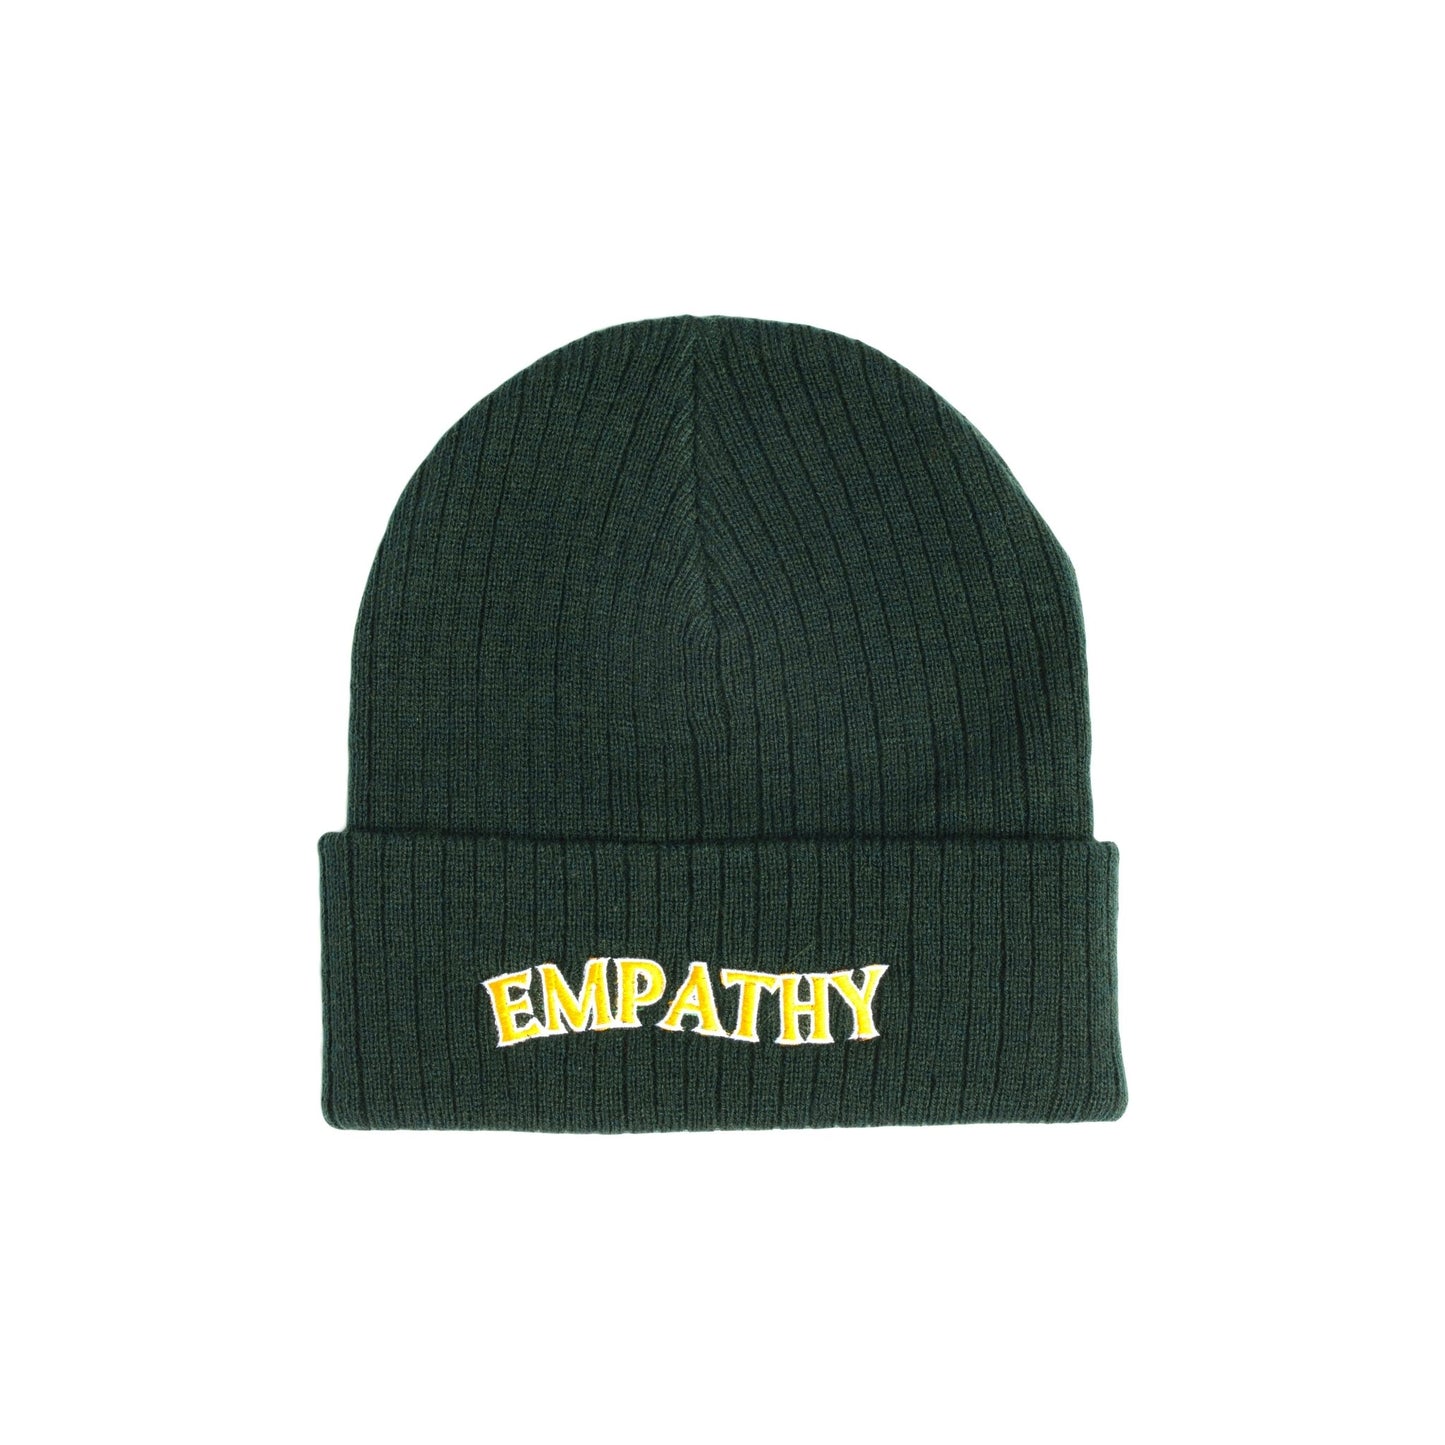 Empathy Embroidered Beanie Wear The Peace Beanie